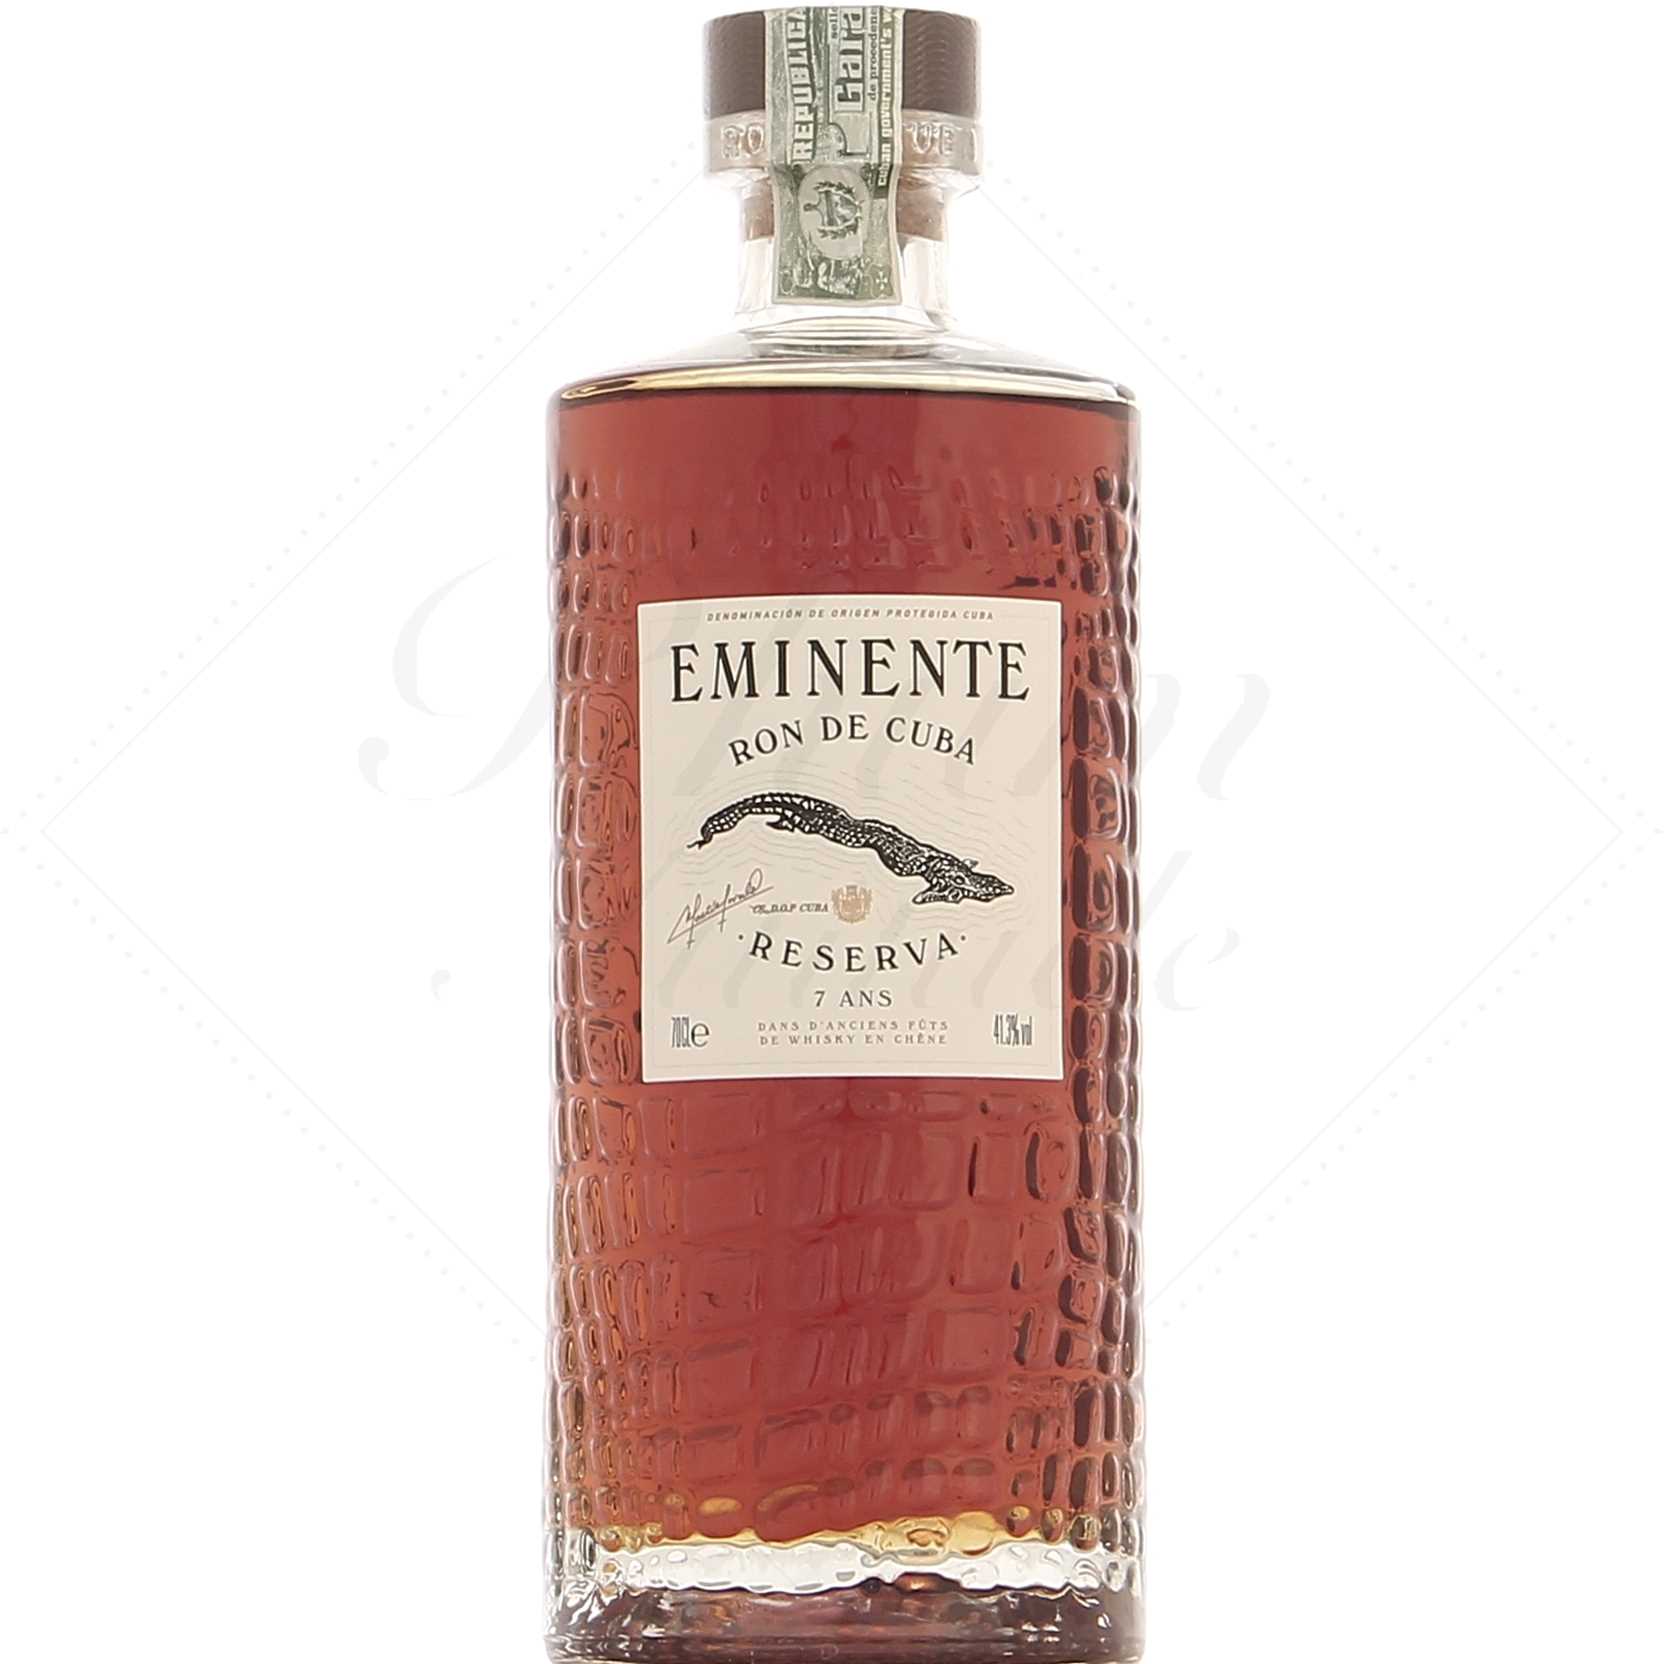 Casa Eminente, a Parisian pop-up for Eminente rum - LVMH